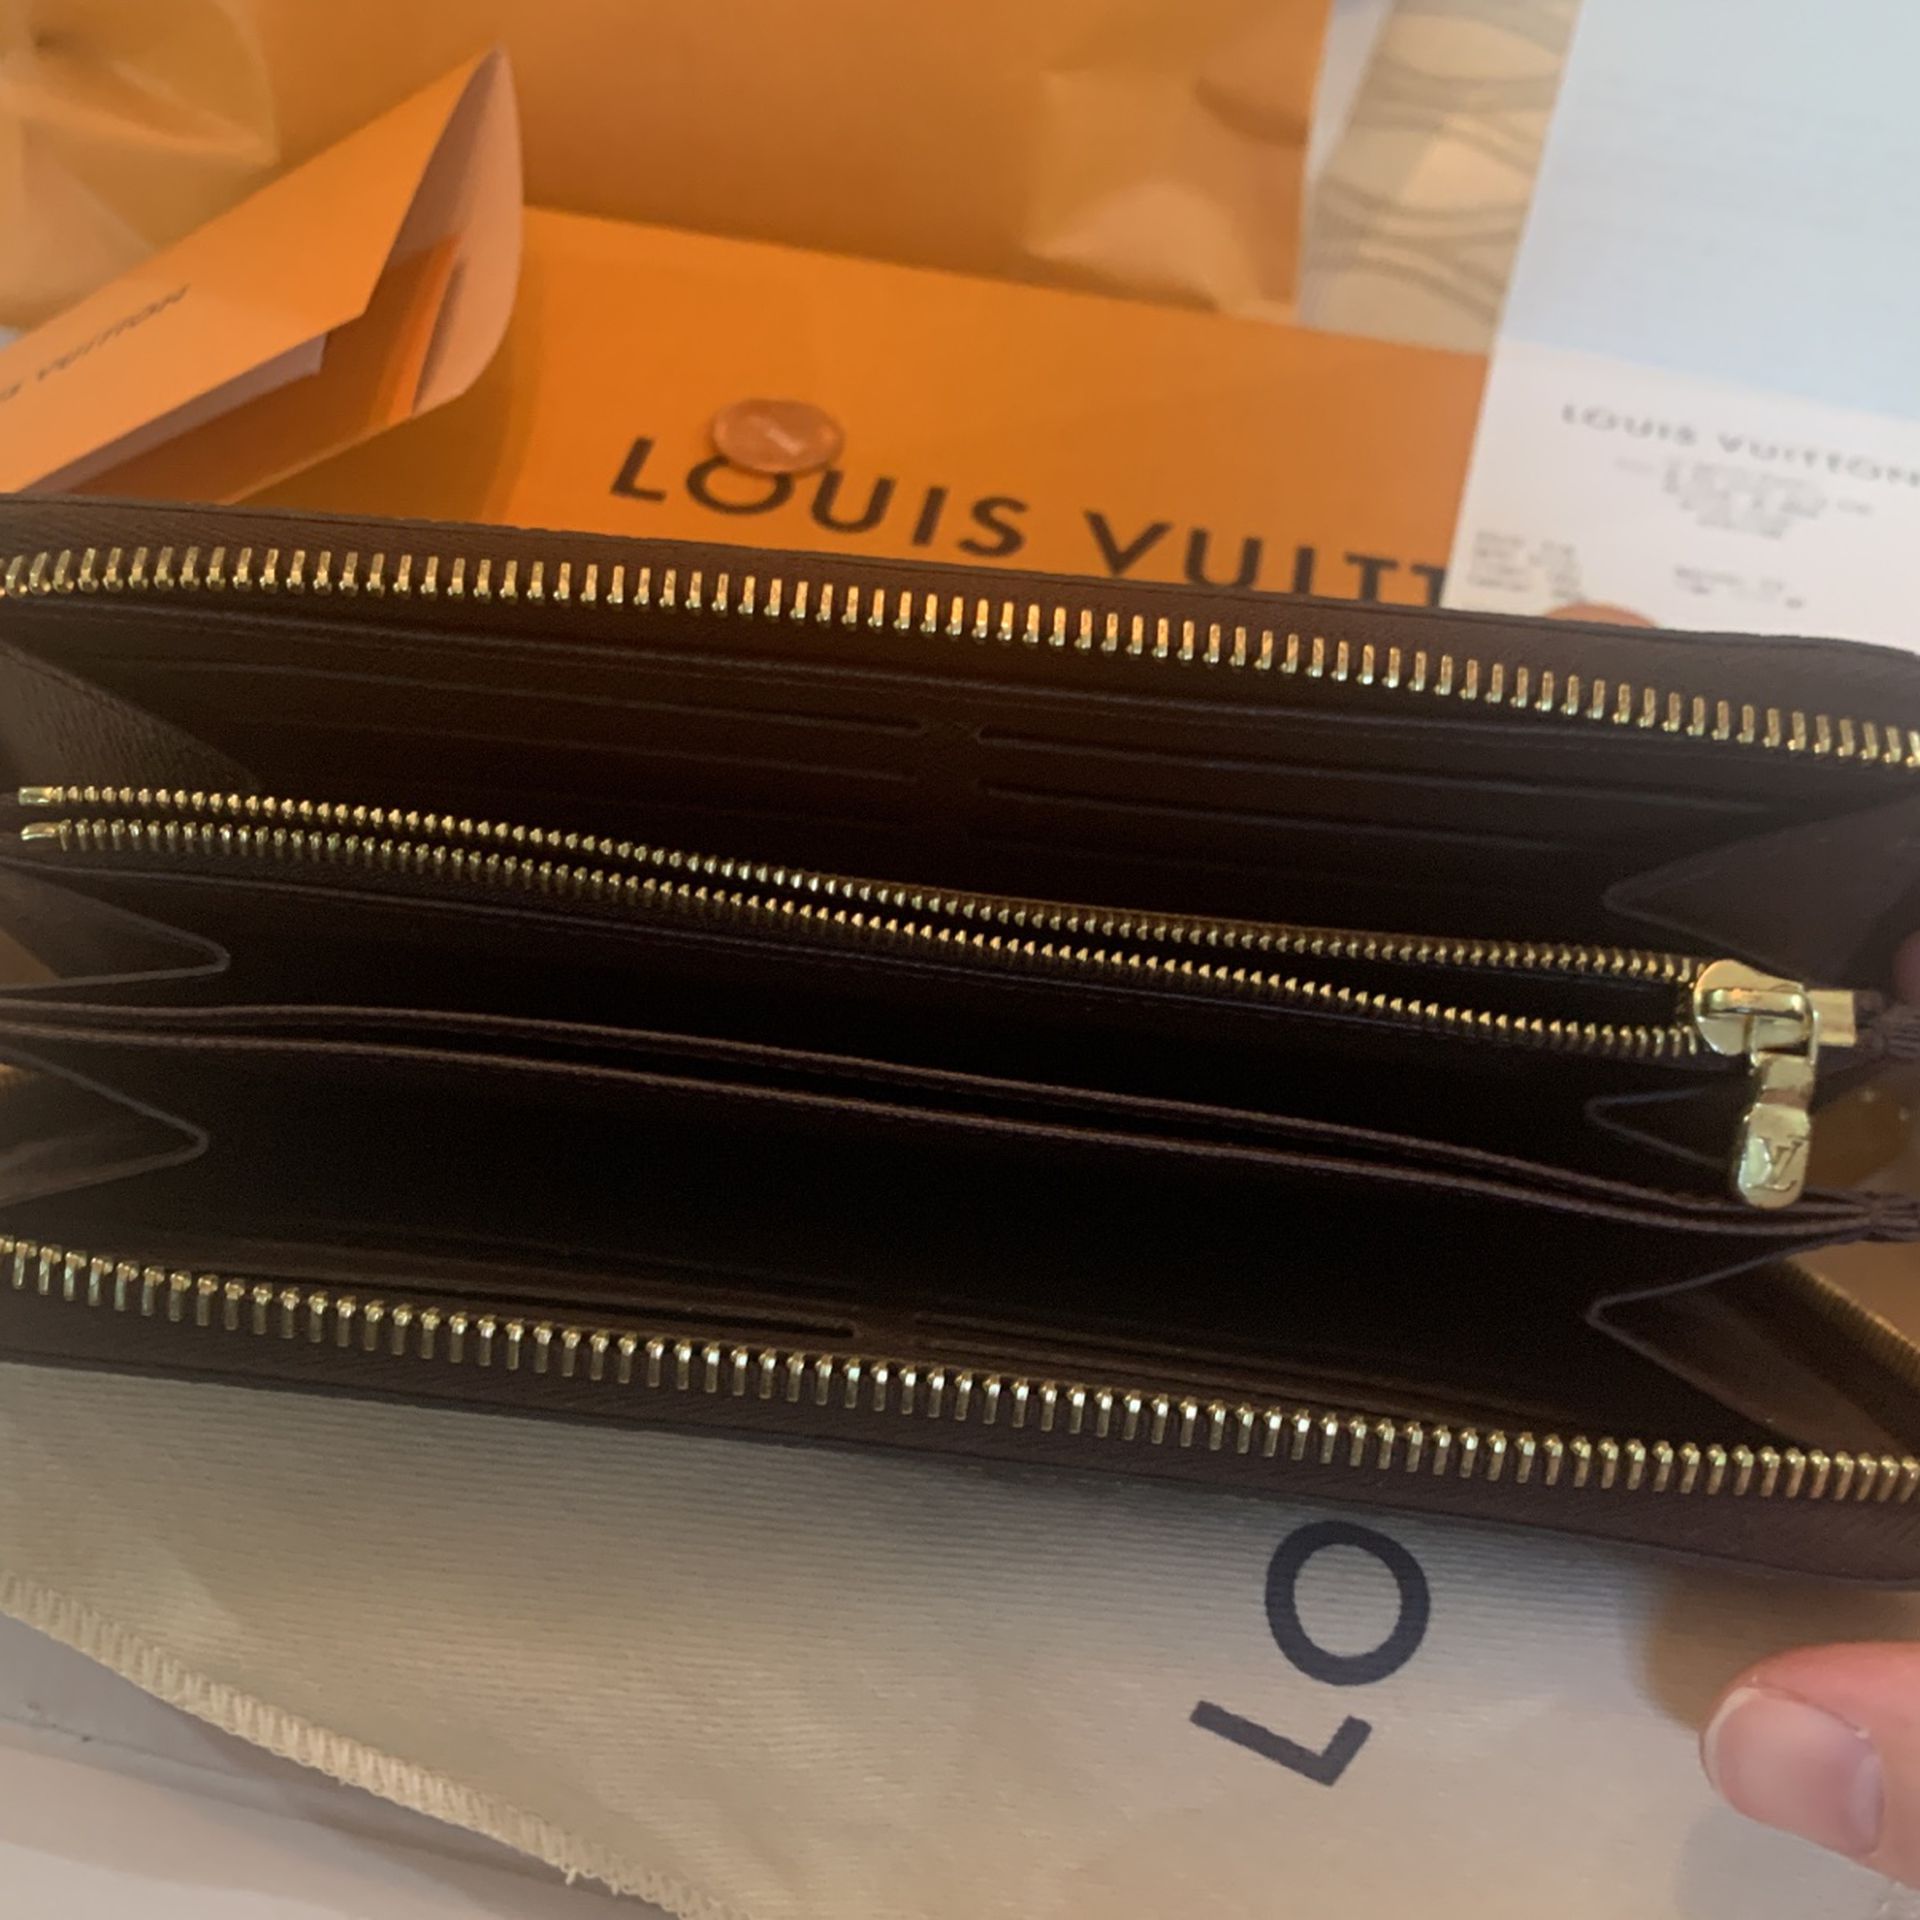 Louis Vuitton Z. Wallet for Sale in Maple Valley, WA - OfferUp